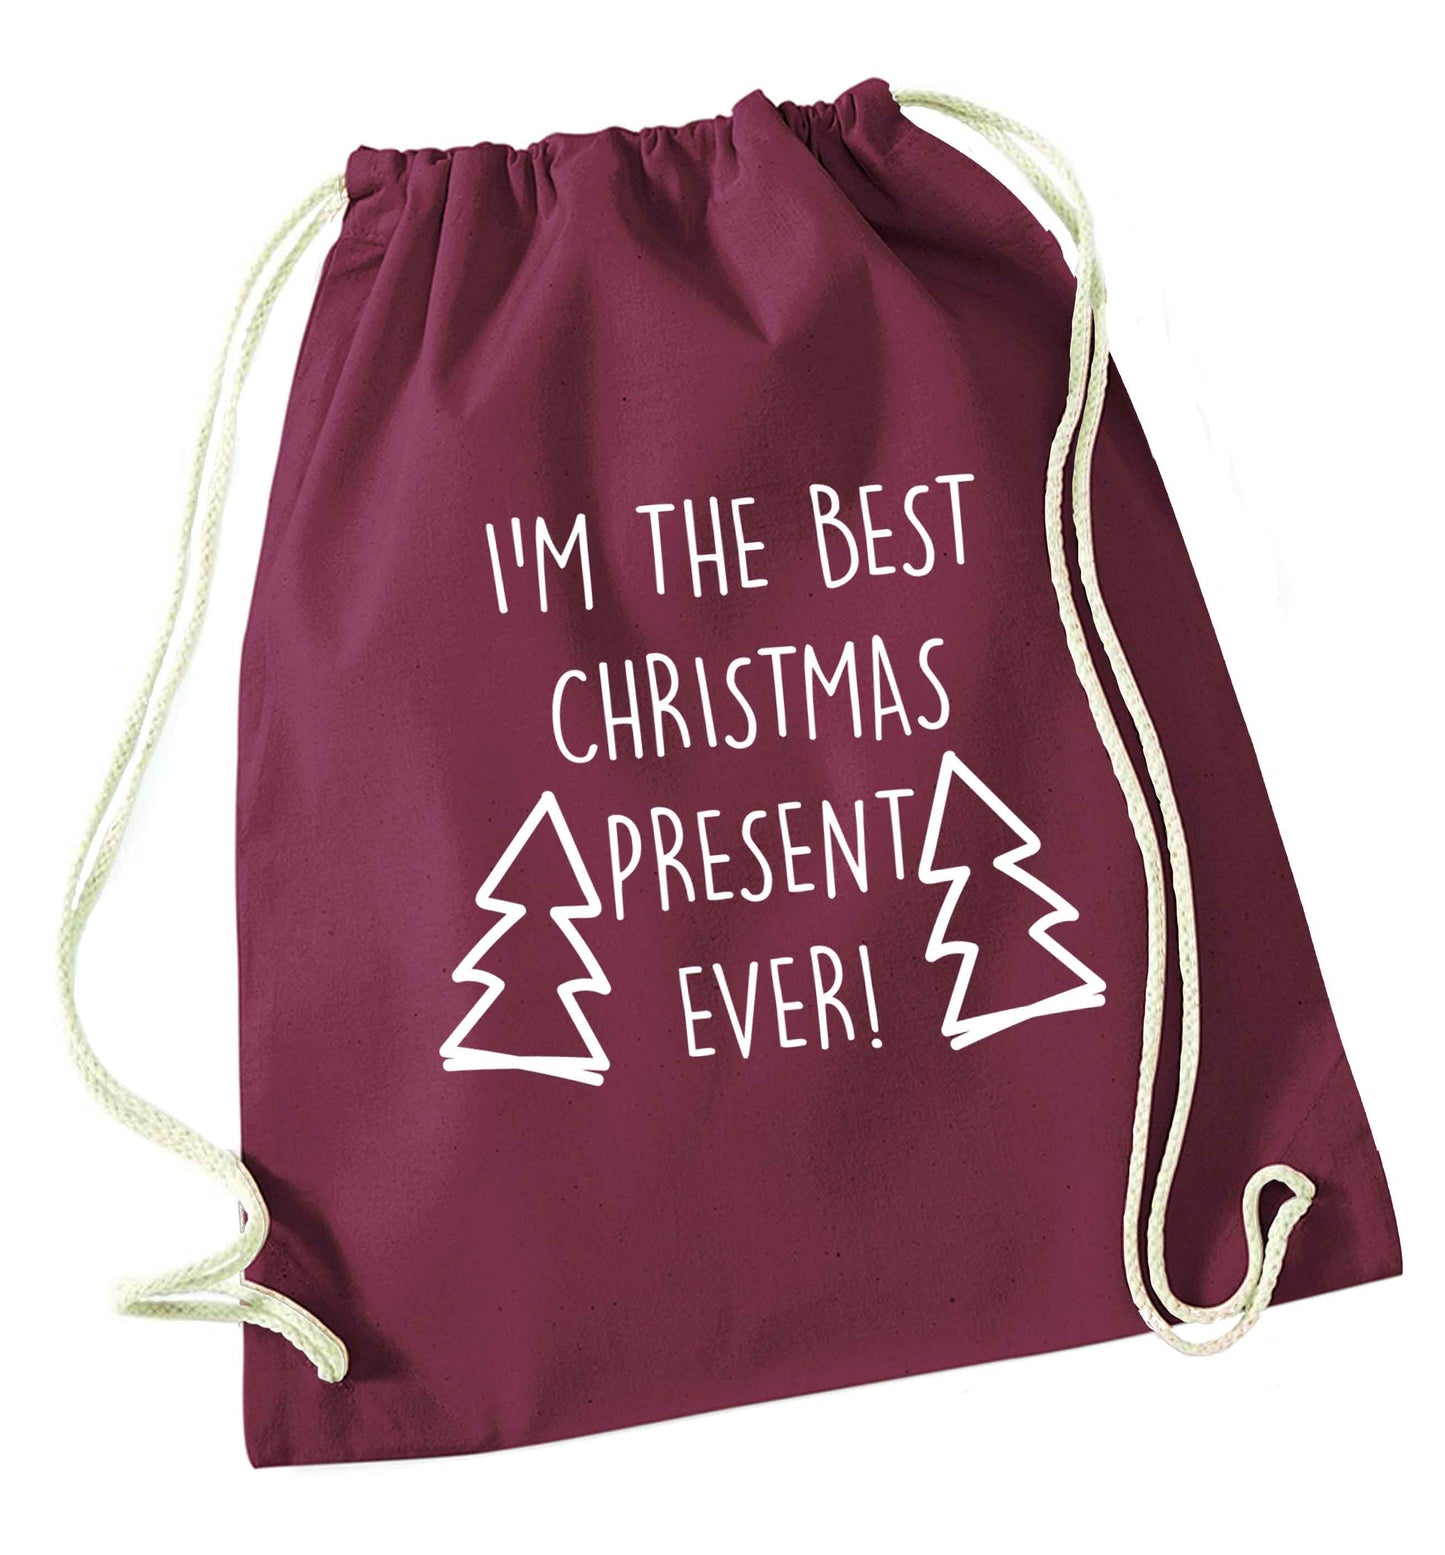 I'm the best Christmas present ever maroon drawstring bag